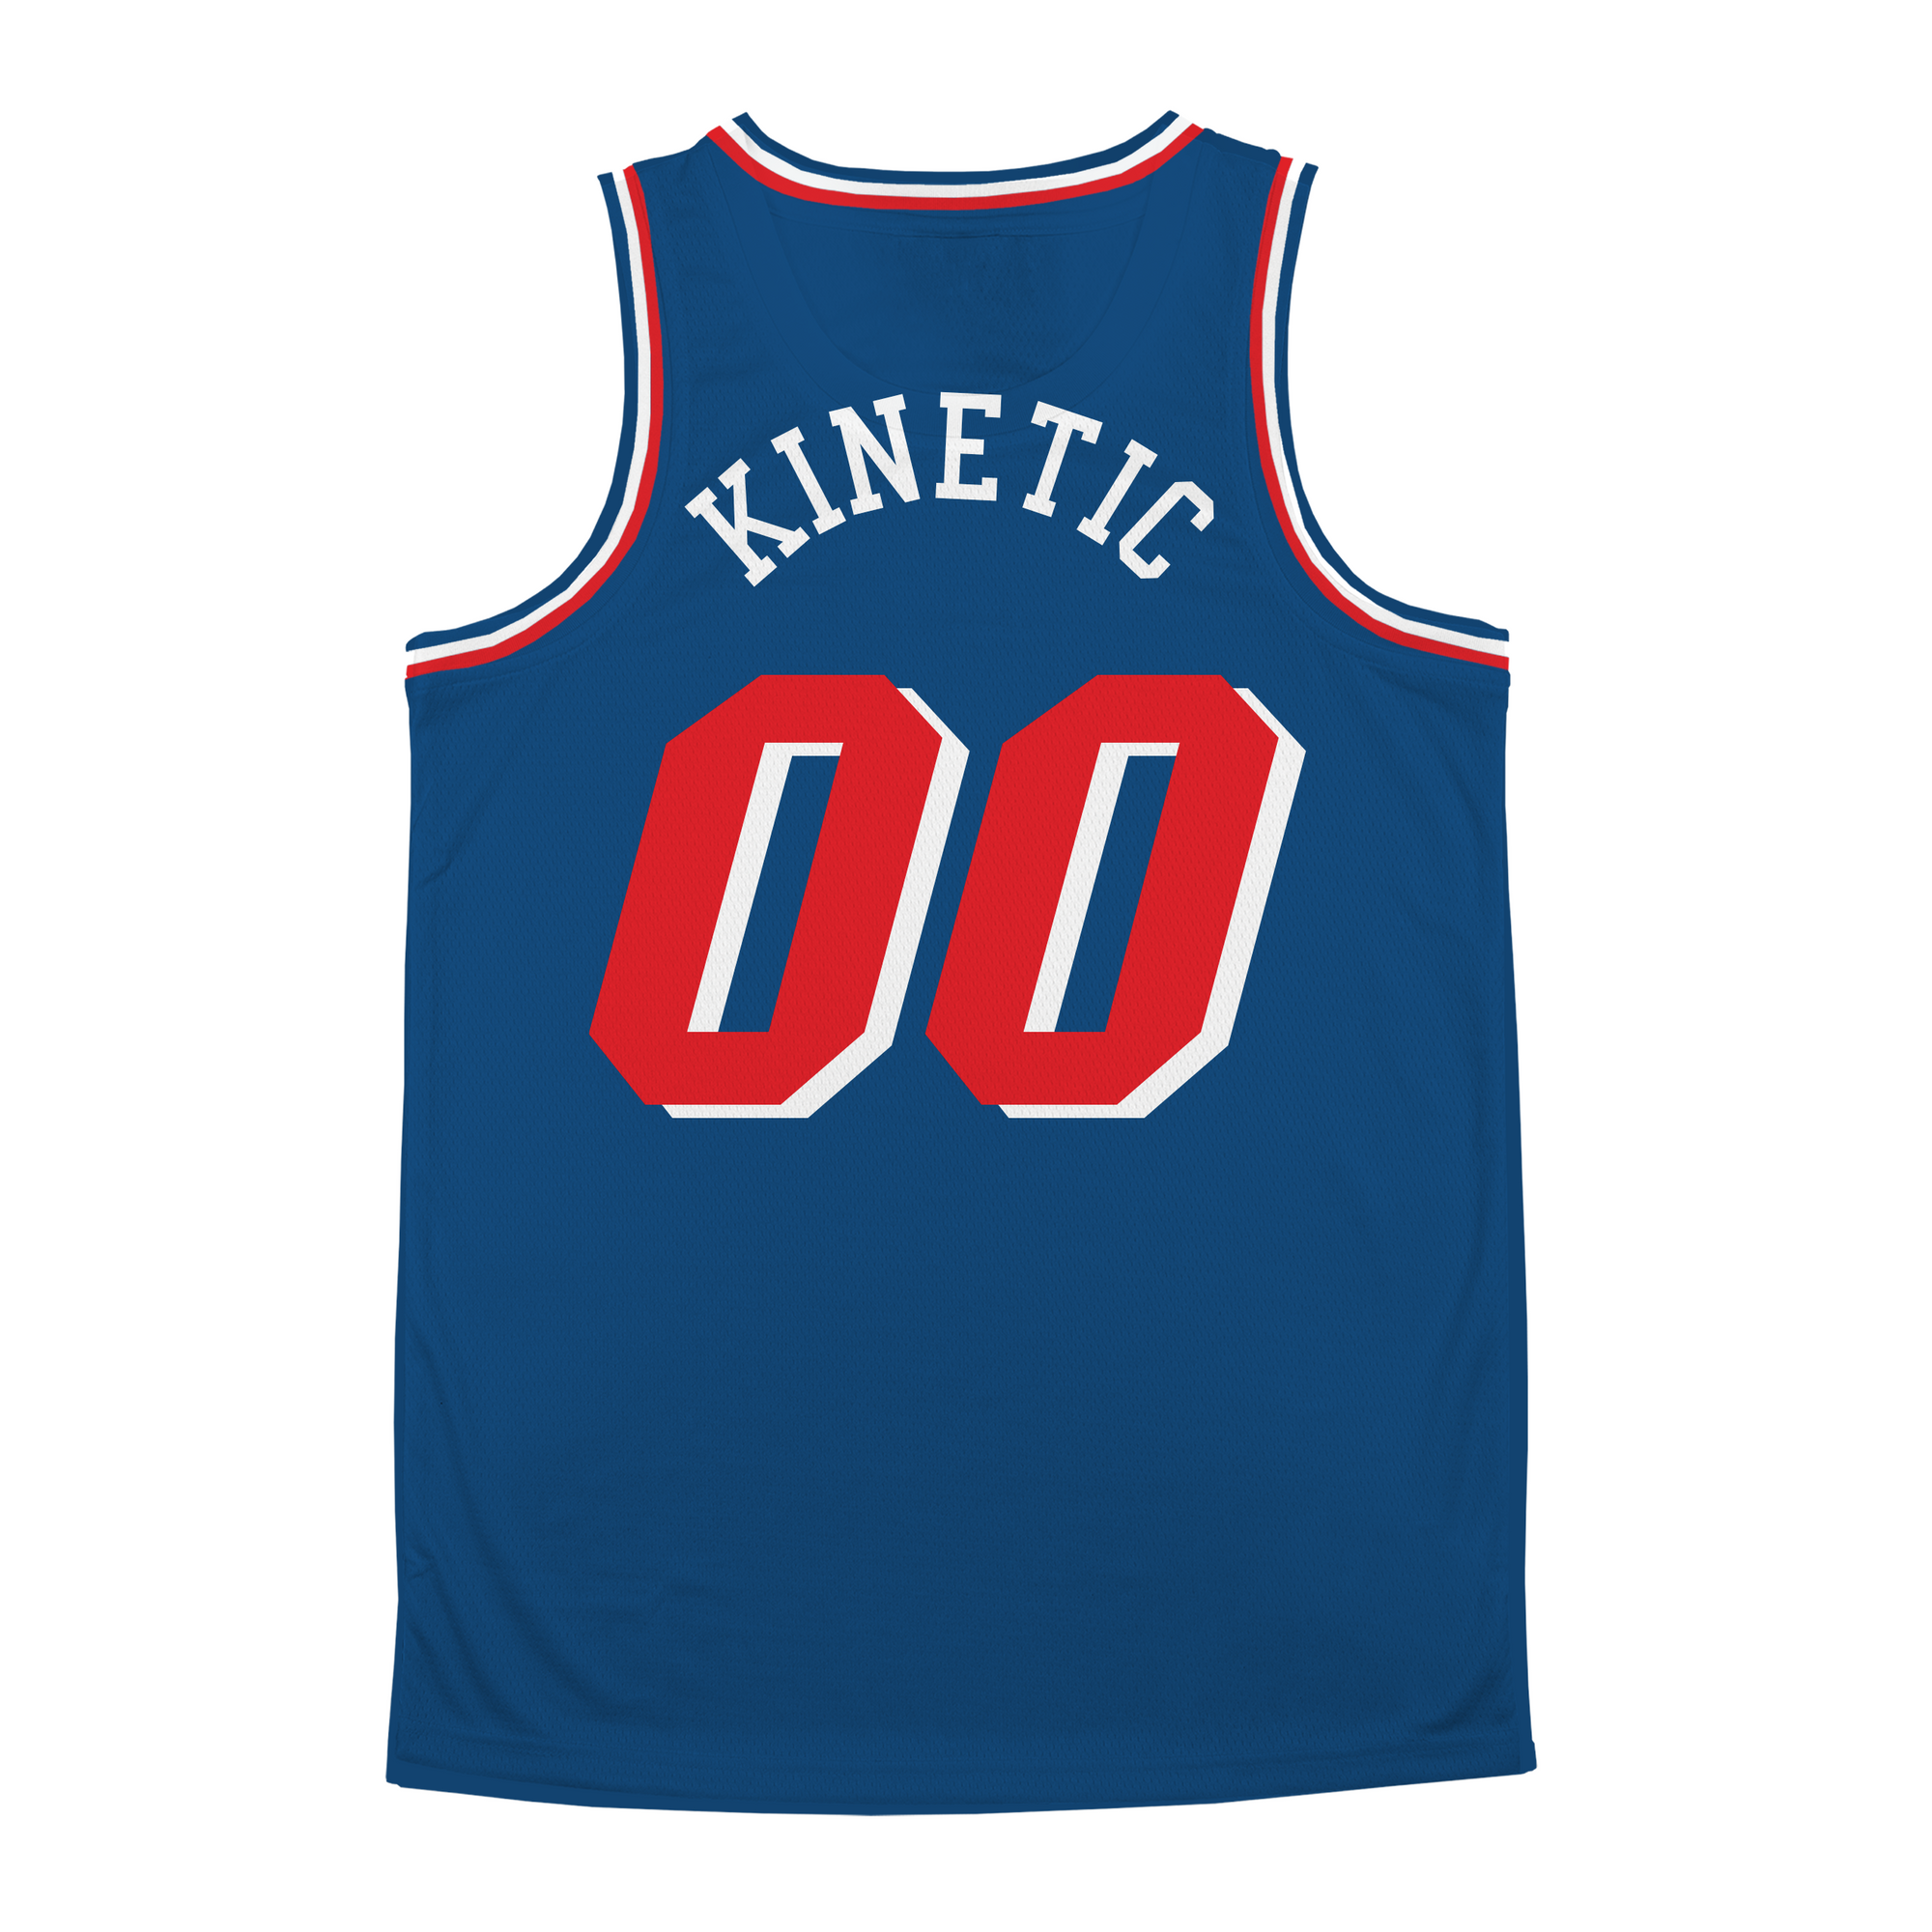 Phi Sigma Kappa - The Dream Basketball Jersey